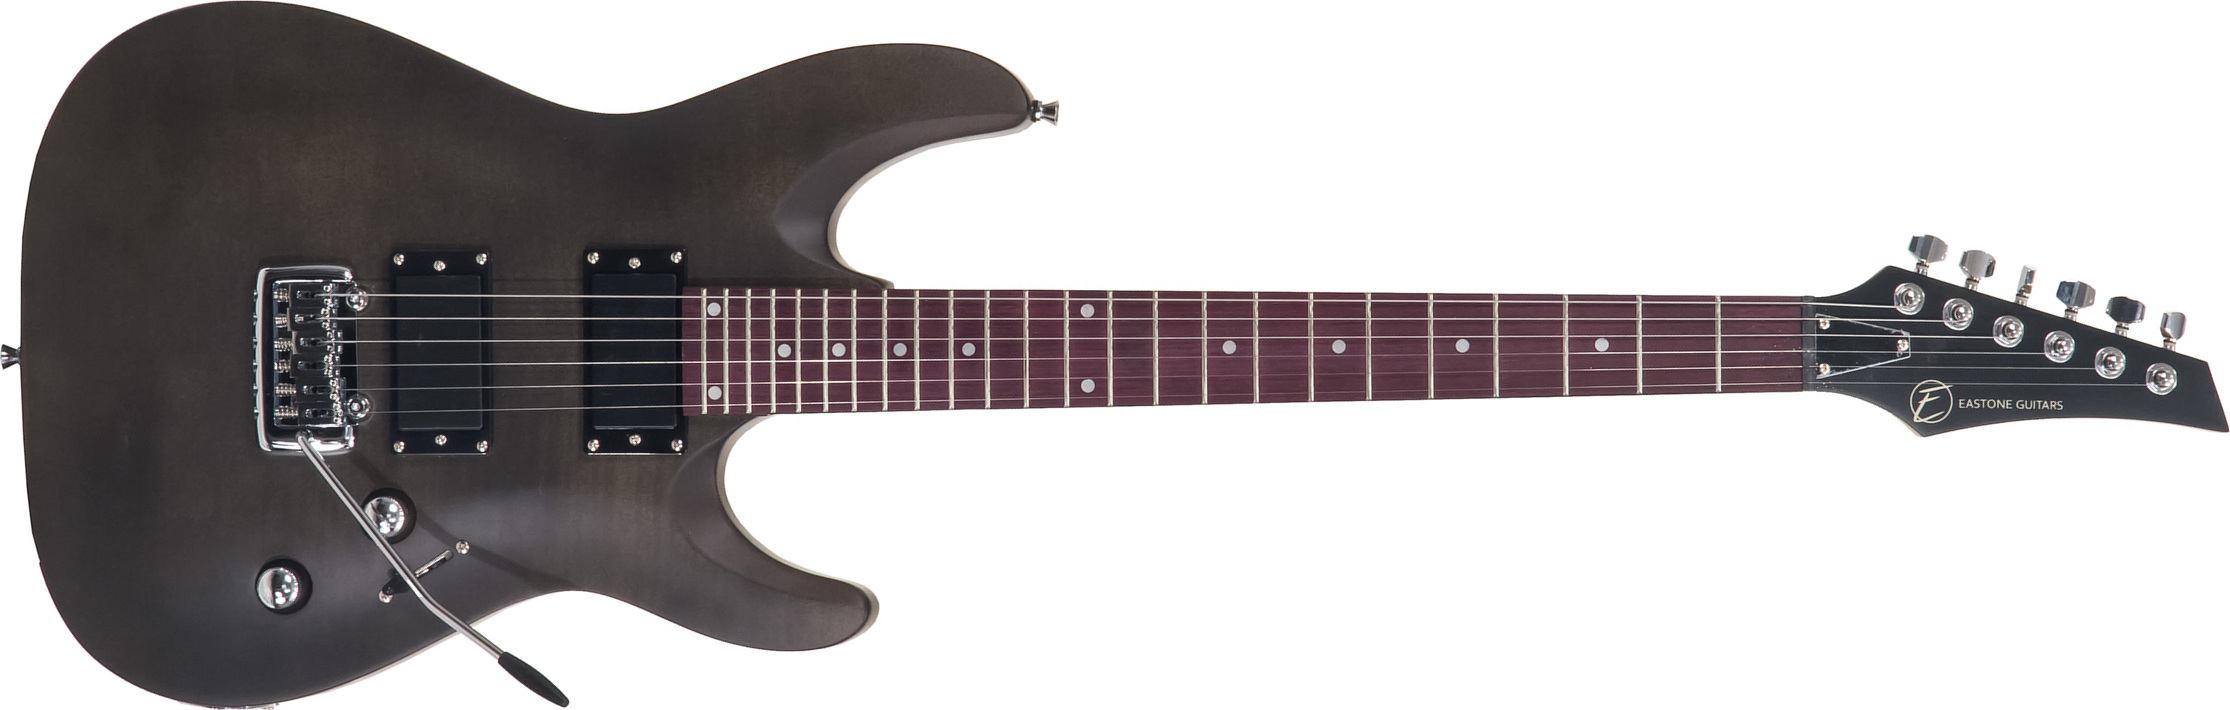 Eastone Metdc Hh Trem Pur - Black Satin - Str shape electric guitar - Main picture